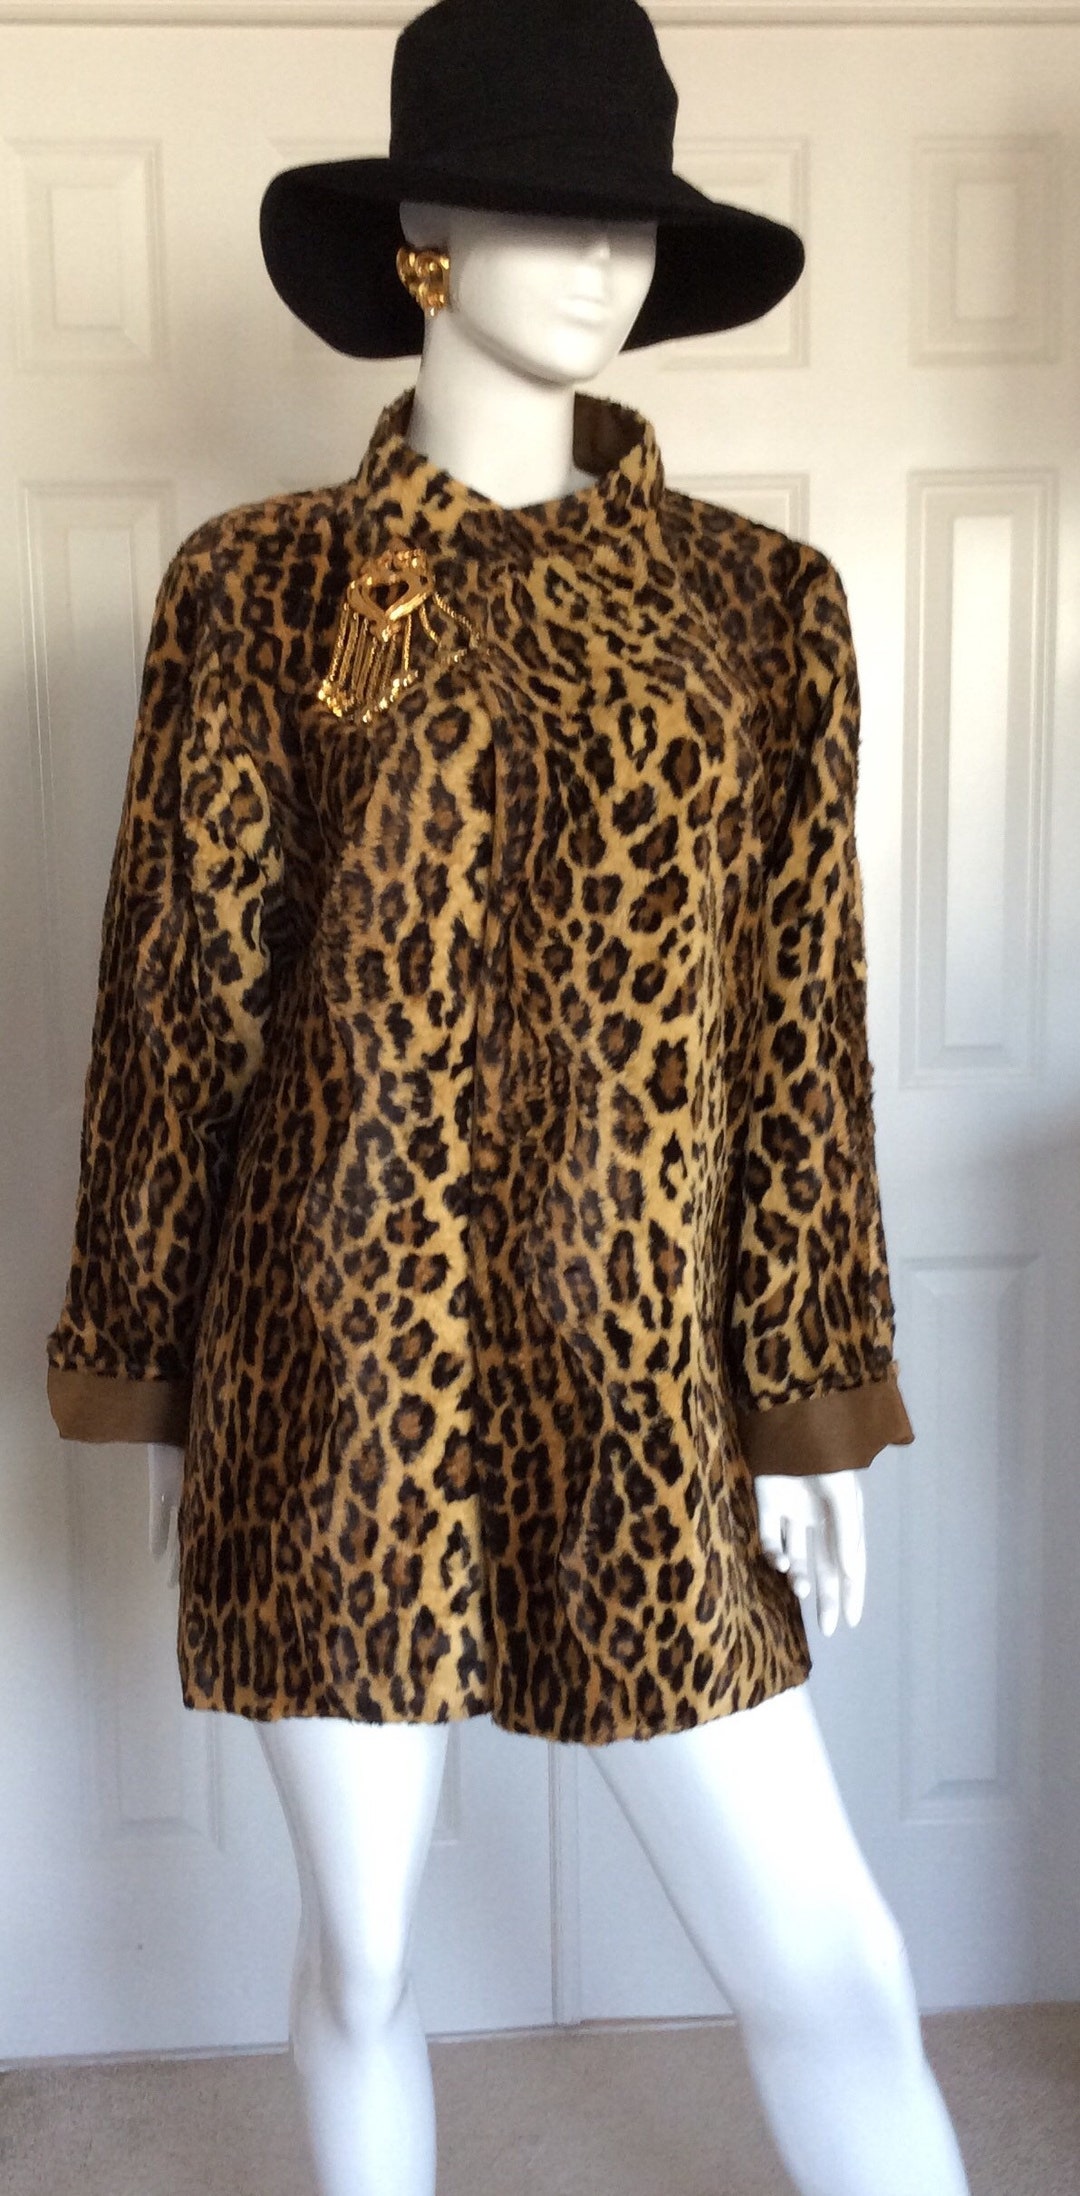 Christian Lacroix Luxe Reversible Light Weight Coat in Leopard Faux Fur ...